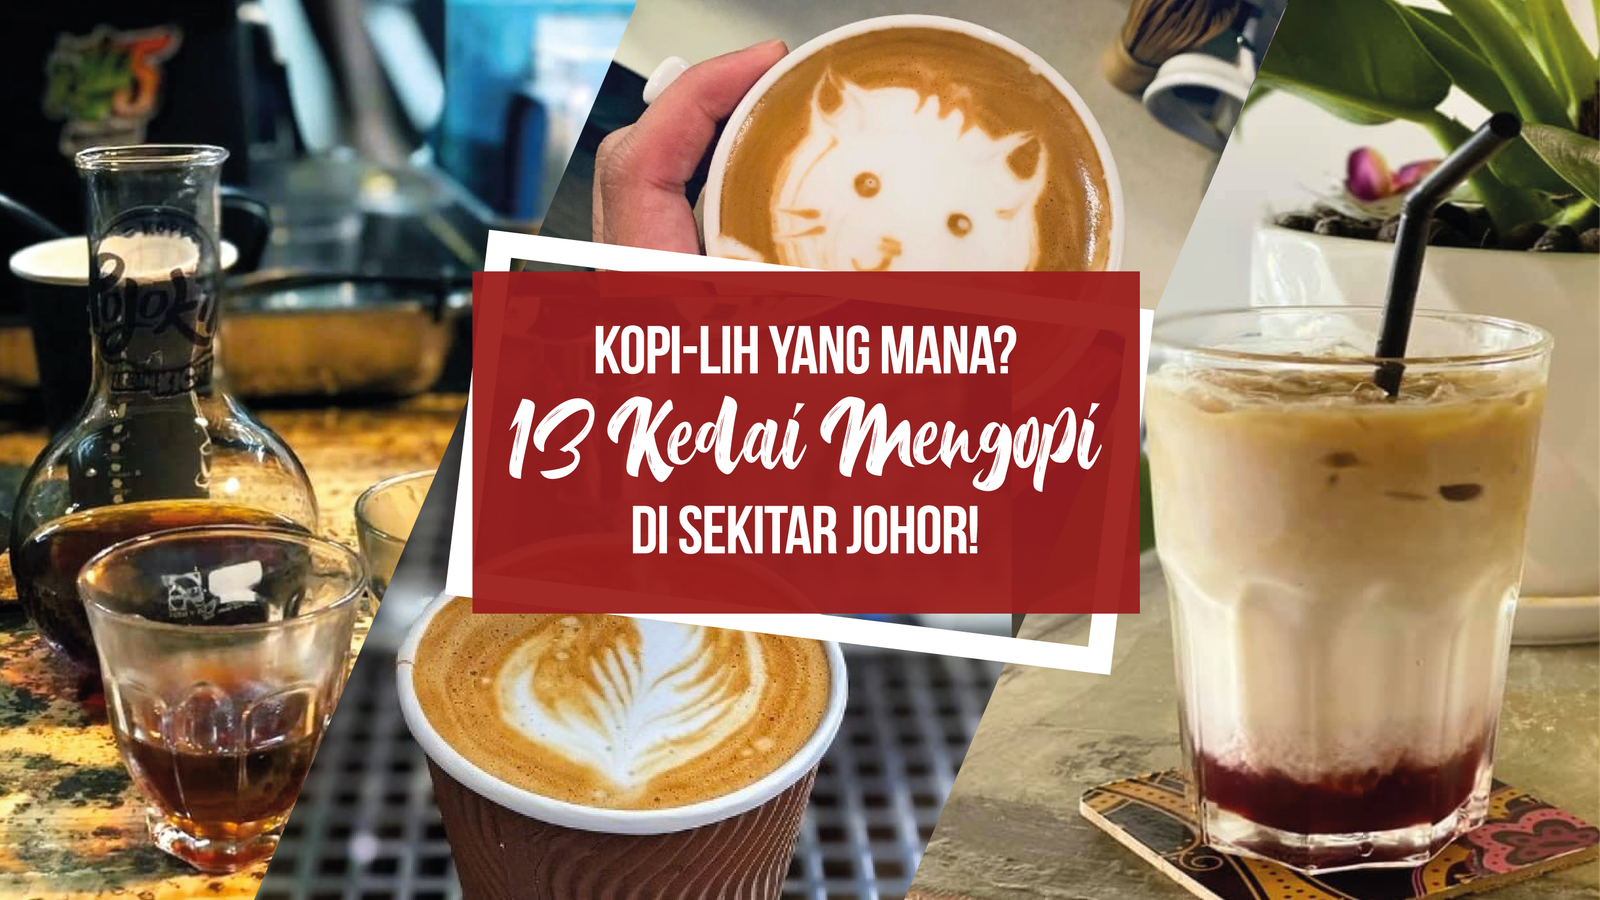 Edisi 1 - Kopi-lih yang mana? Ada 13 kedai untuk mengopi di sekitar Johor!